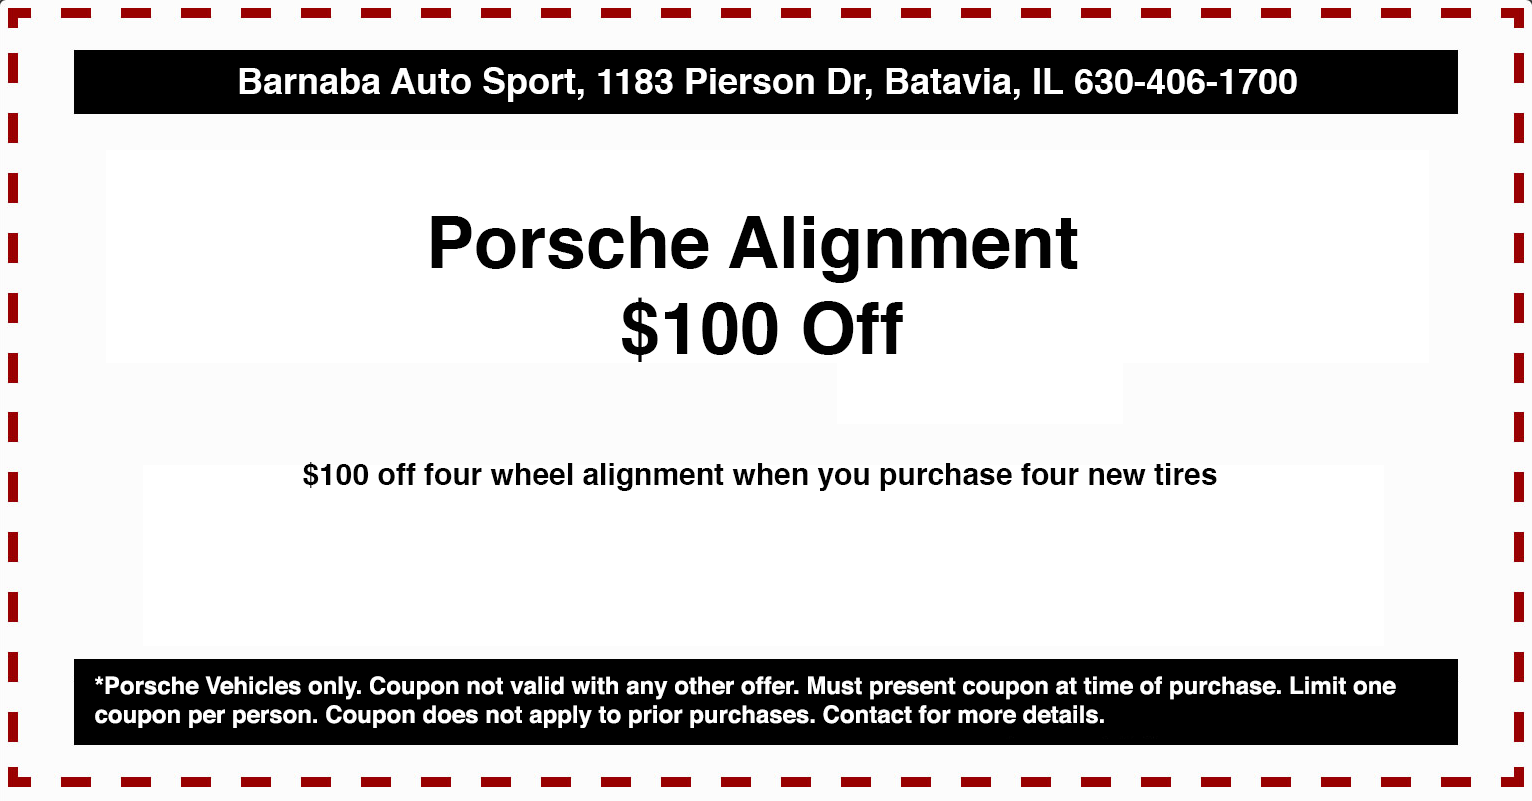 Porsche Alignment $100 Off